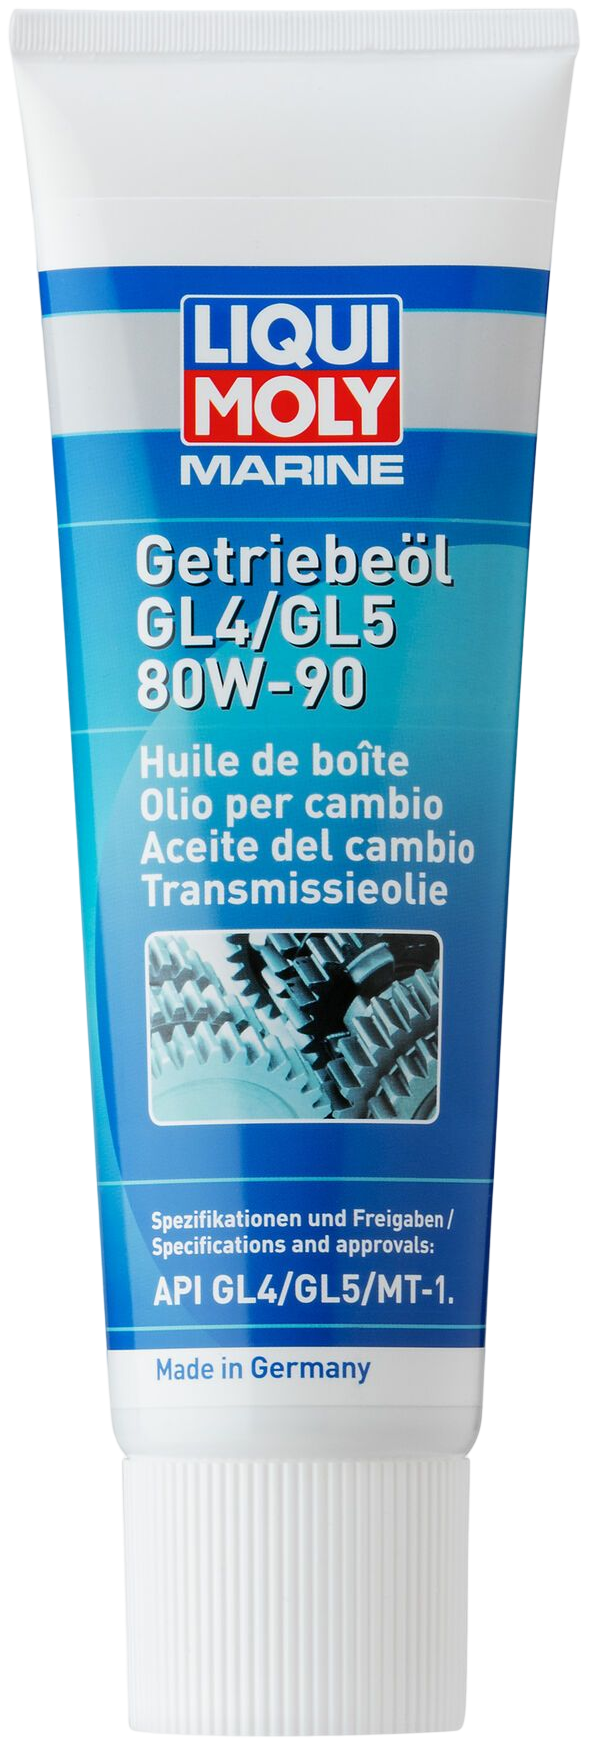 Liqui Moly Marine Transmissieolie GL4/GL5 80W-90, 250 ml